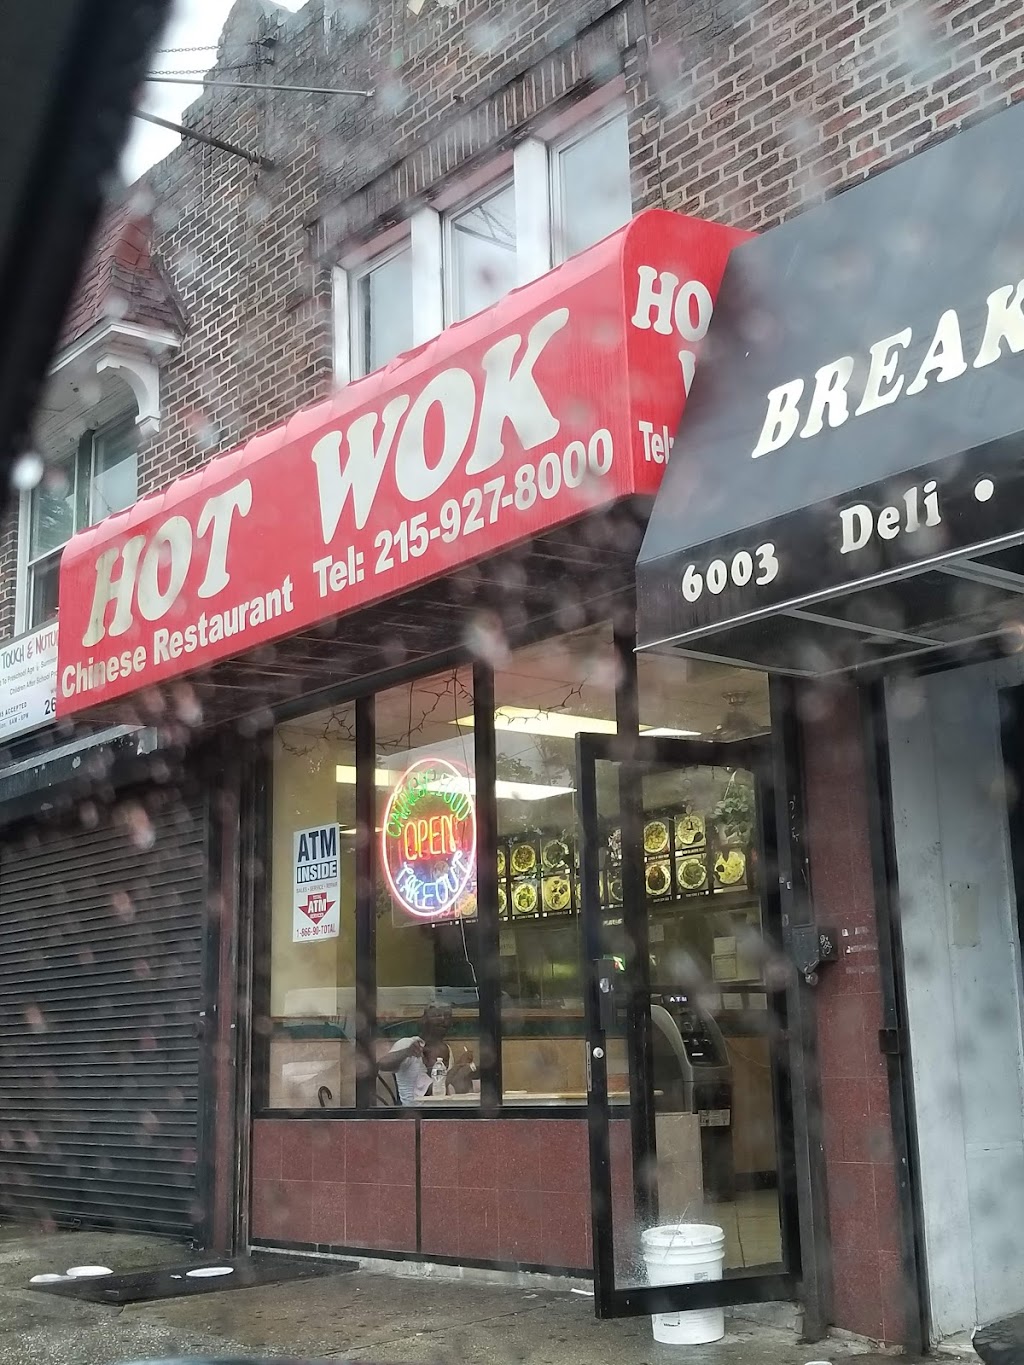 Hot Wok | 6005 N 5th St, Philadelphia, PA 19120 | Phone: (215) 927-8000